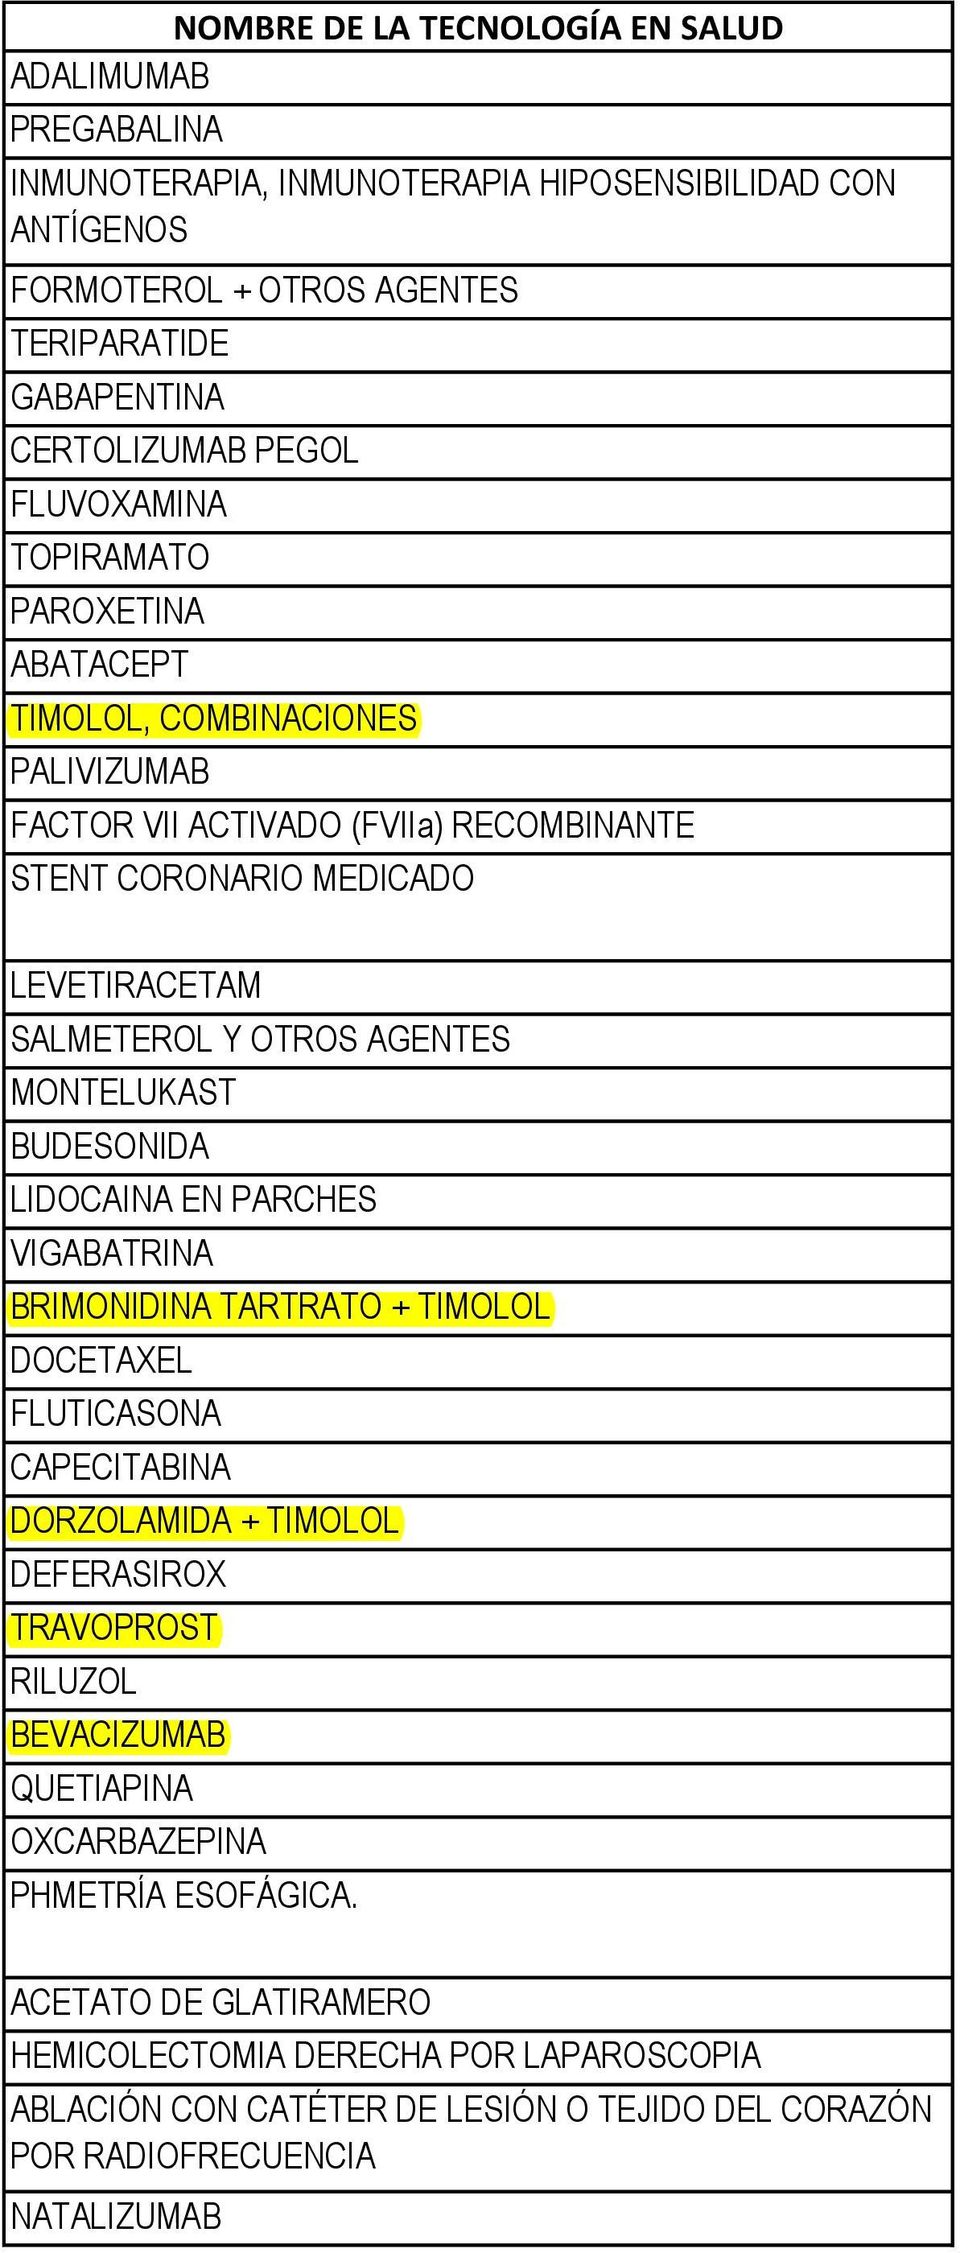 MONTELUKAST BUDESONIDA LIDOCAINA EN PARCHES VIGABATRINA BRIMONIDINA TARTRATO + TIMOLOL DOCETAXEL FLUTICASONA CAPECITABINA DORZOLAMIDA + TIMOLOL DEFERASIROX TRAVOPROST RILUZOL BEVACIZUMAB